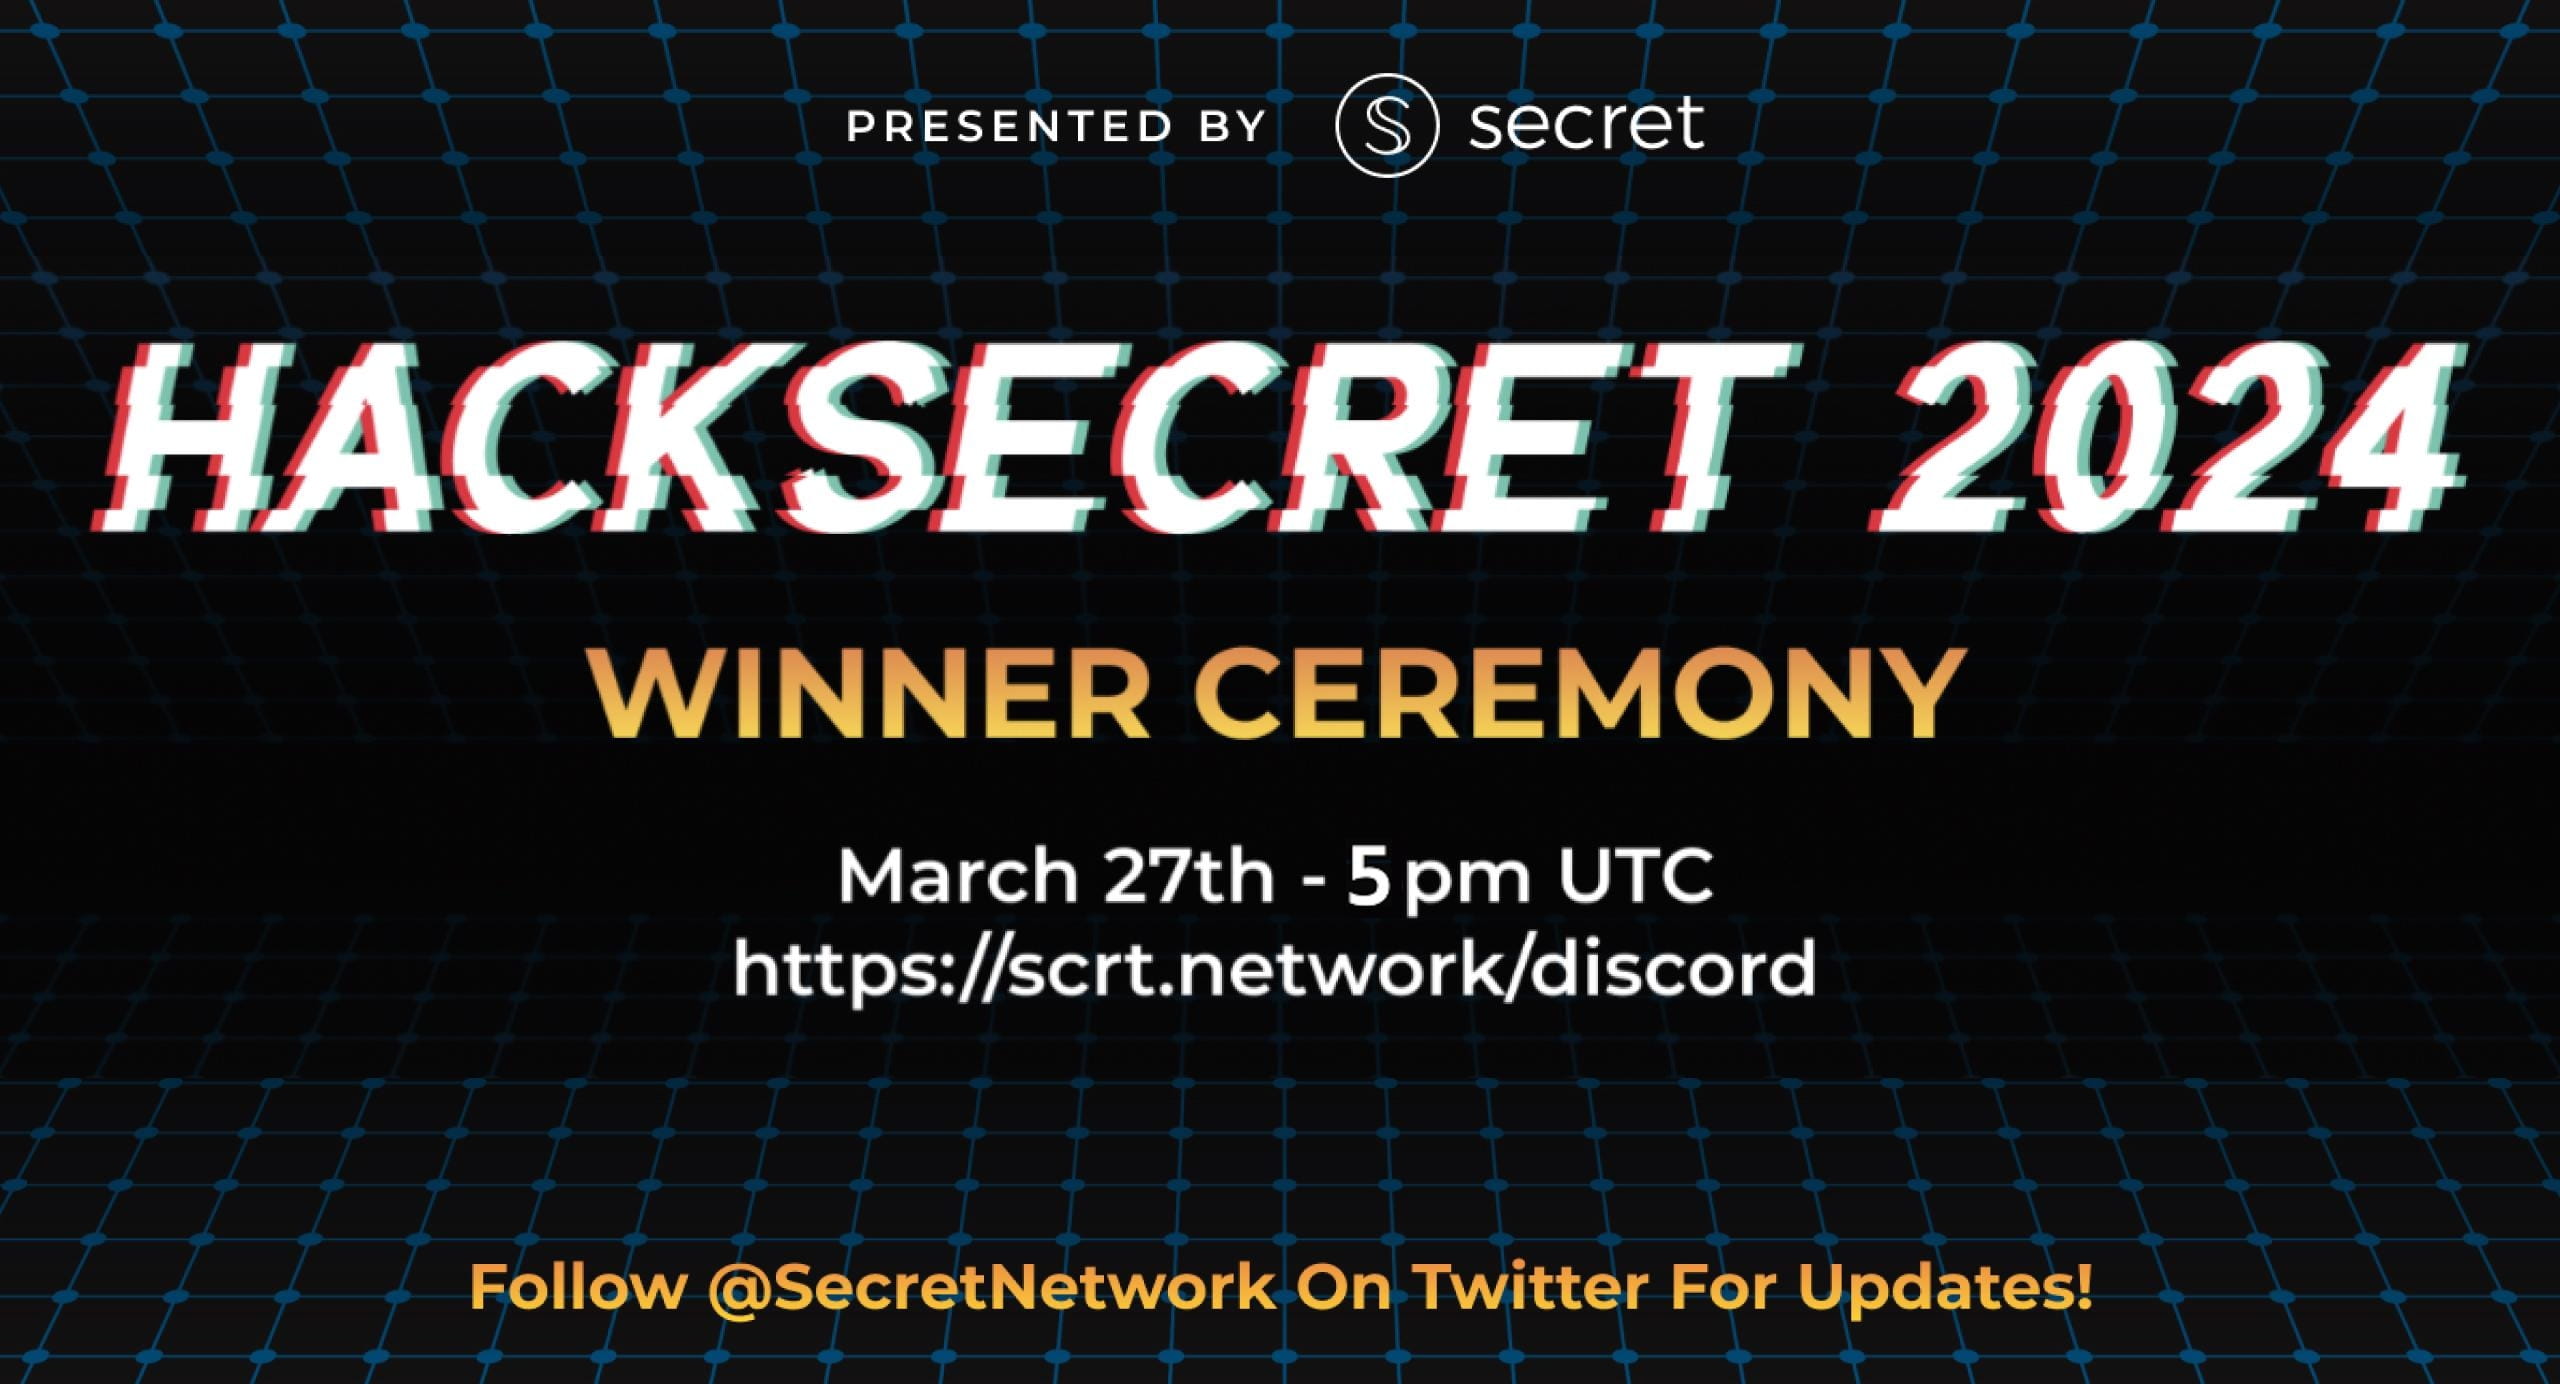 HackSecret 2024 Hackathon Winner Ceremony